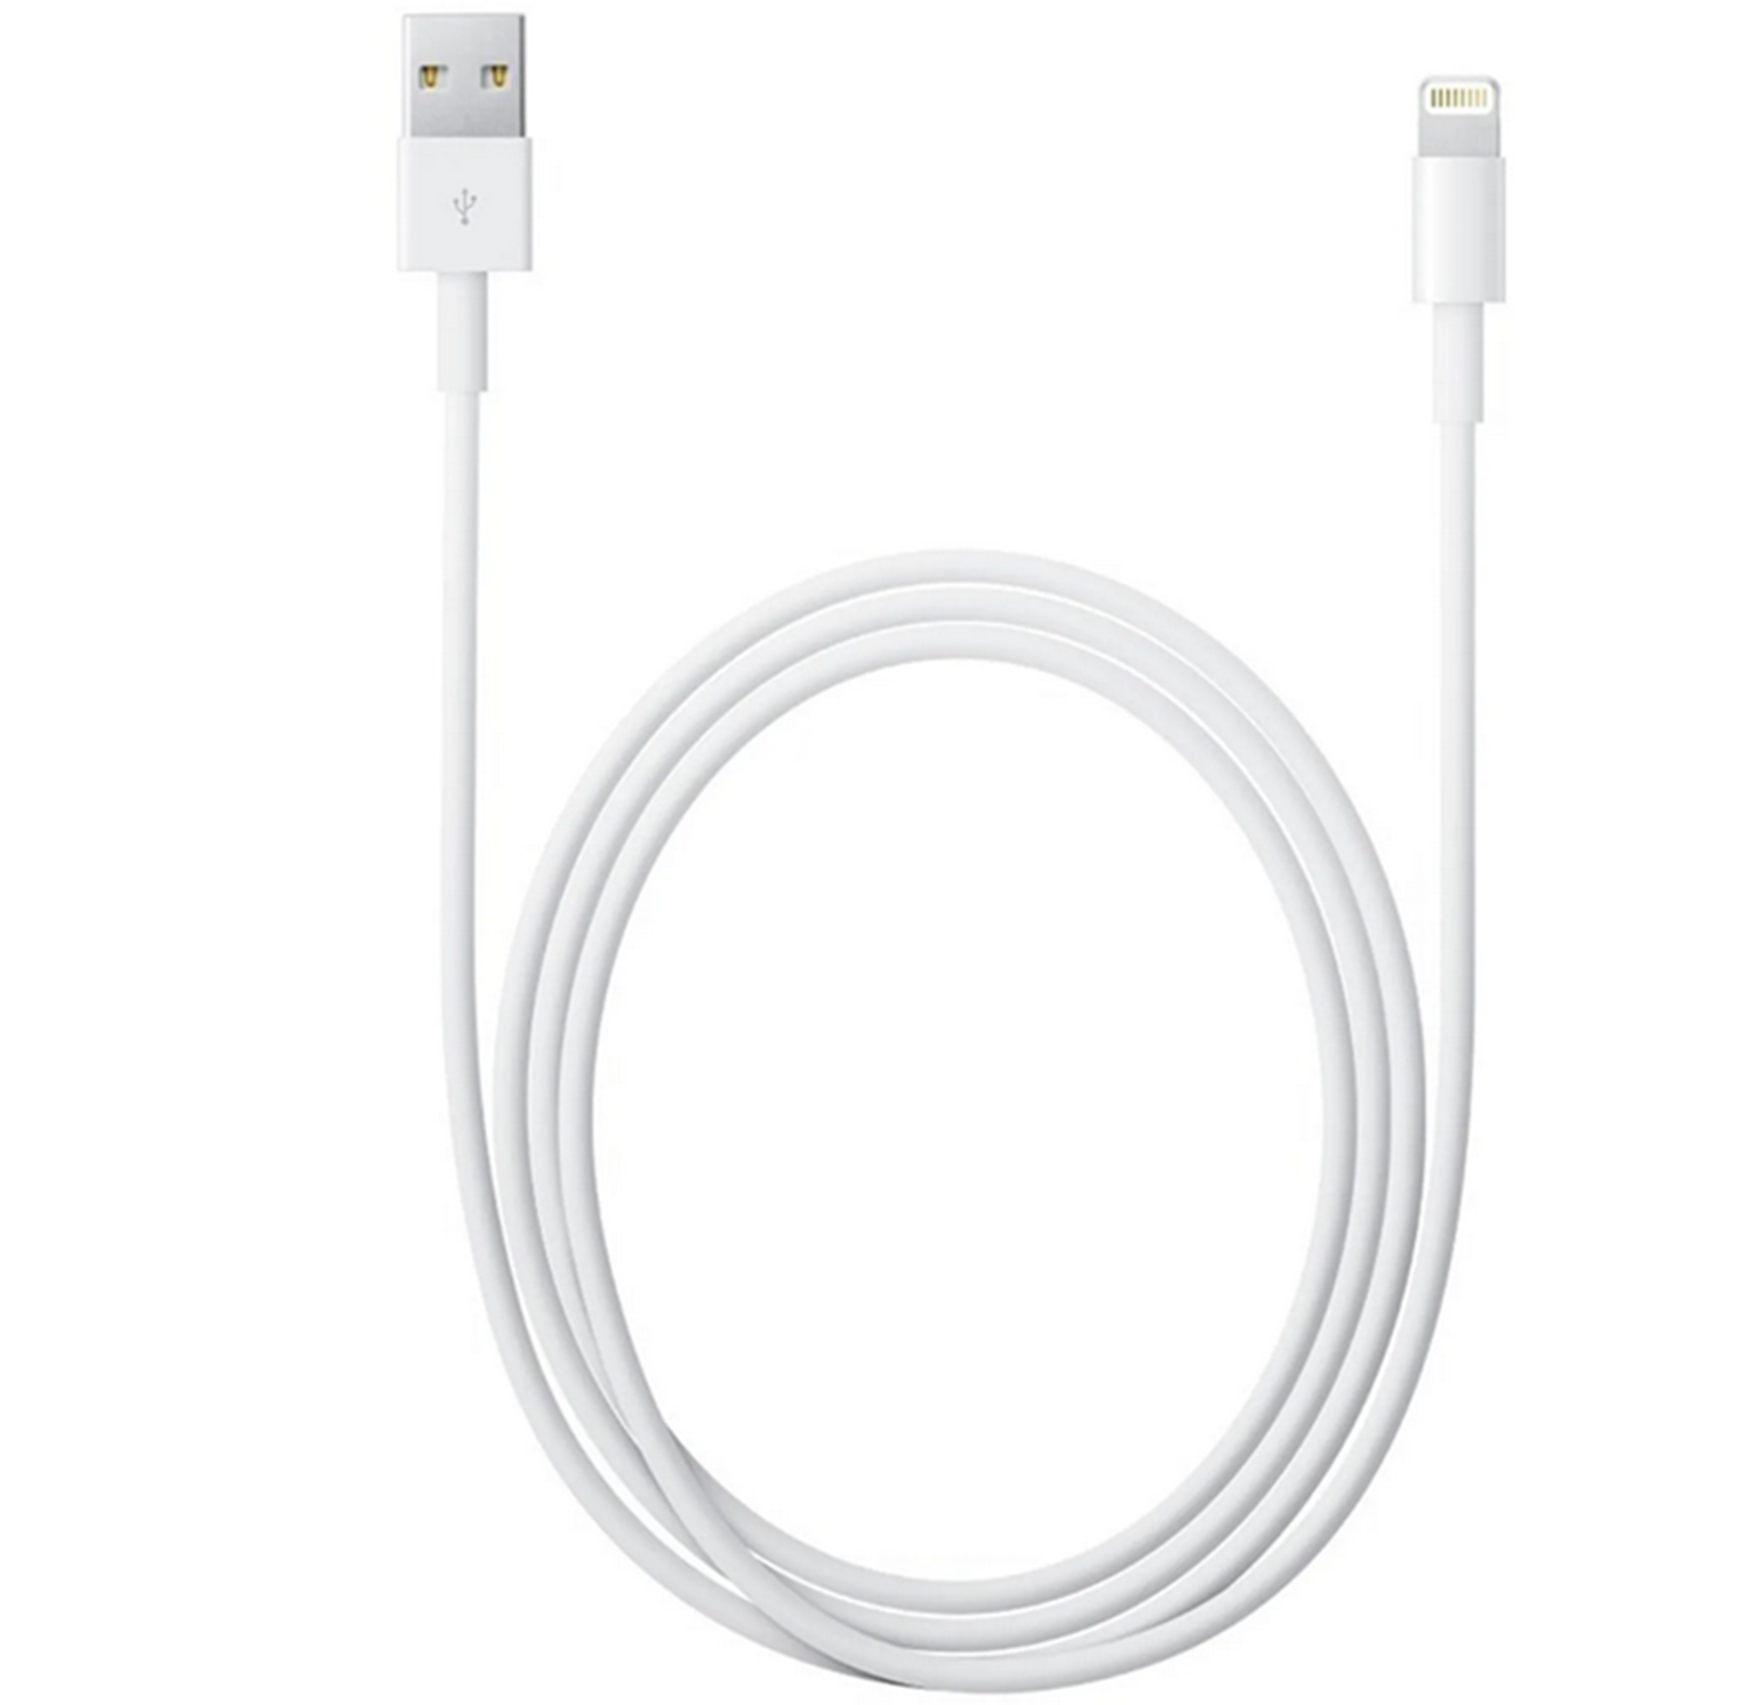 10x iPhone SE 2020 Lightning auf USB Kabel 2m Ladekabel